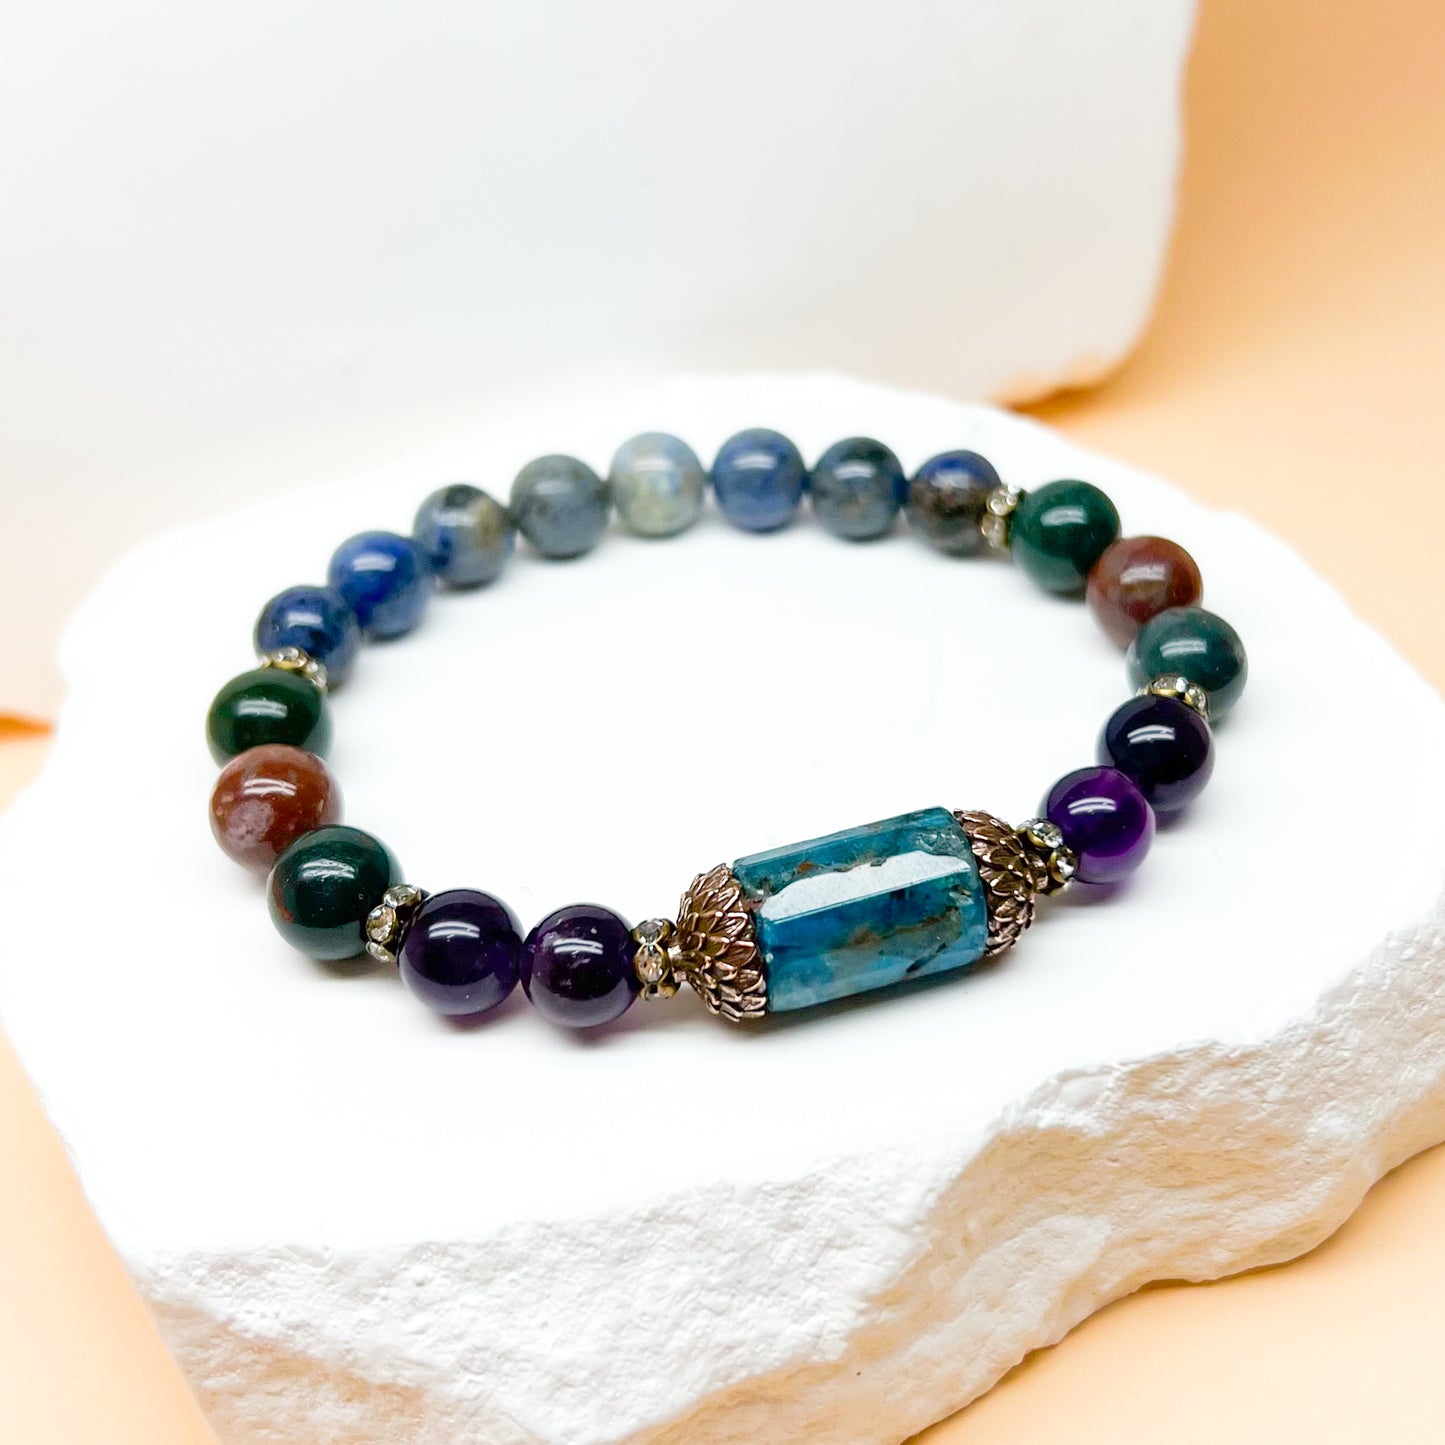 Blue apatite and bloodstone gemstone bracelet